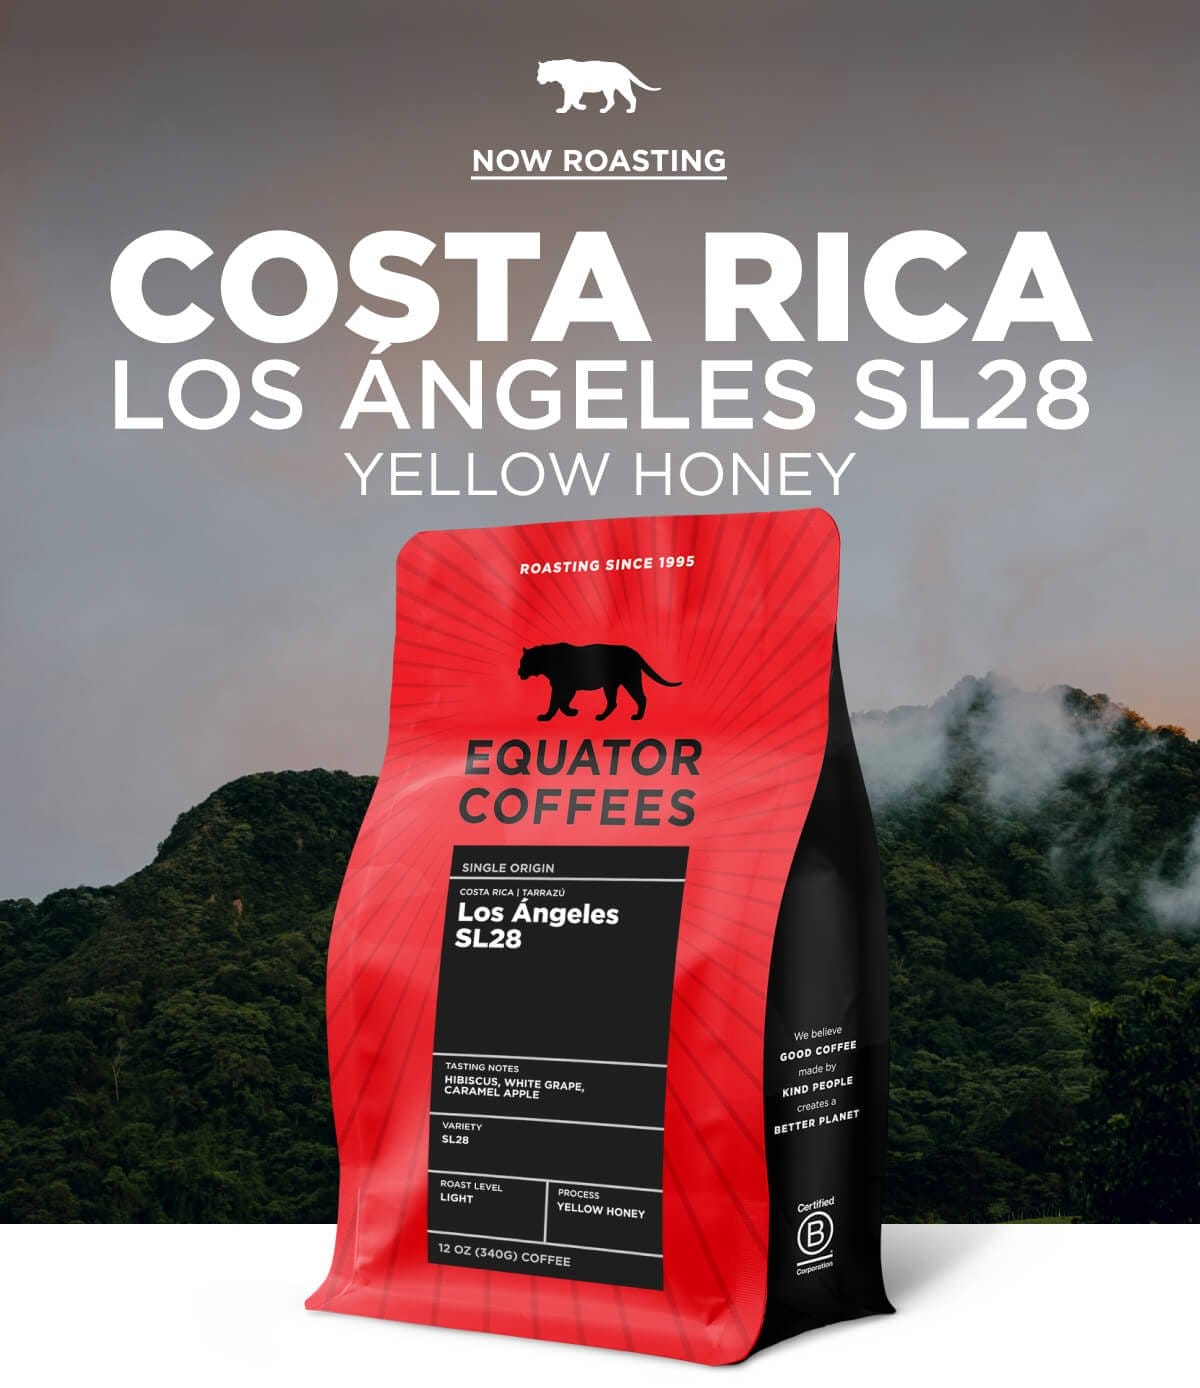 Now Roasting: Costa Rica Los Angeles SL28 Yellow Honey